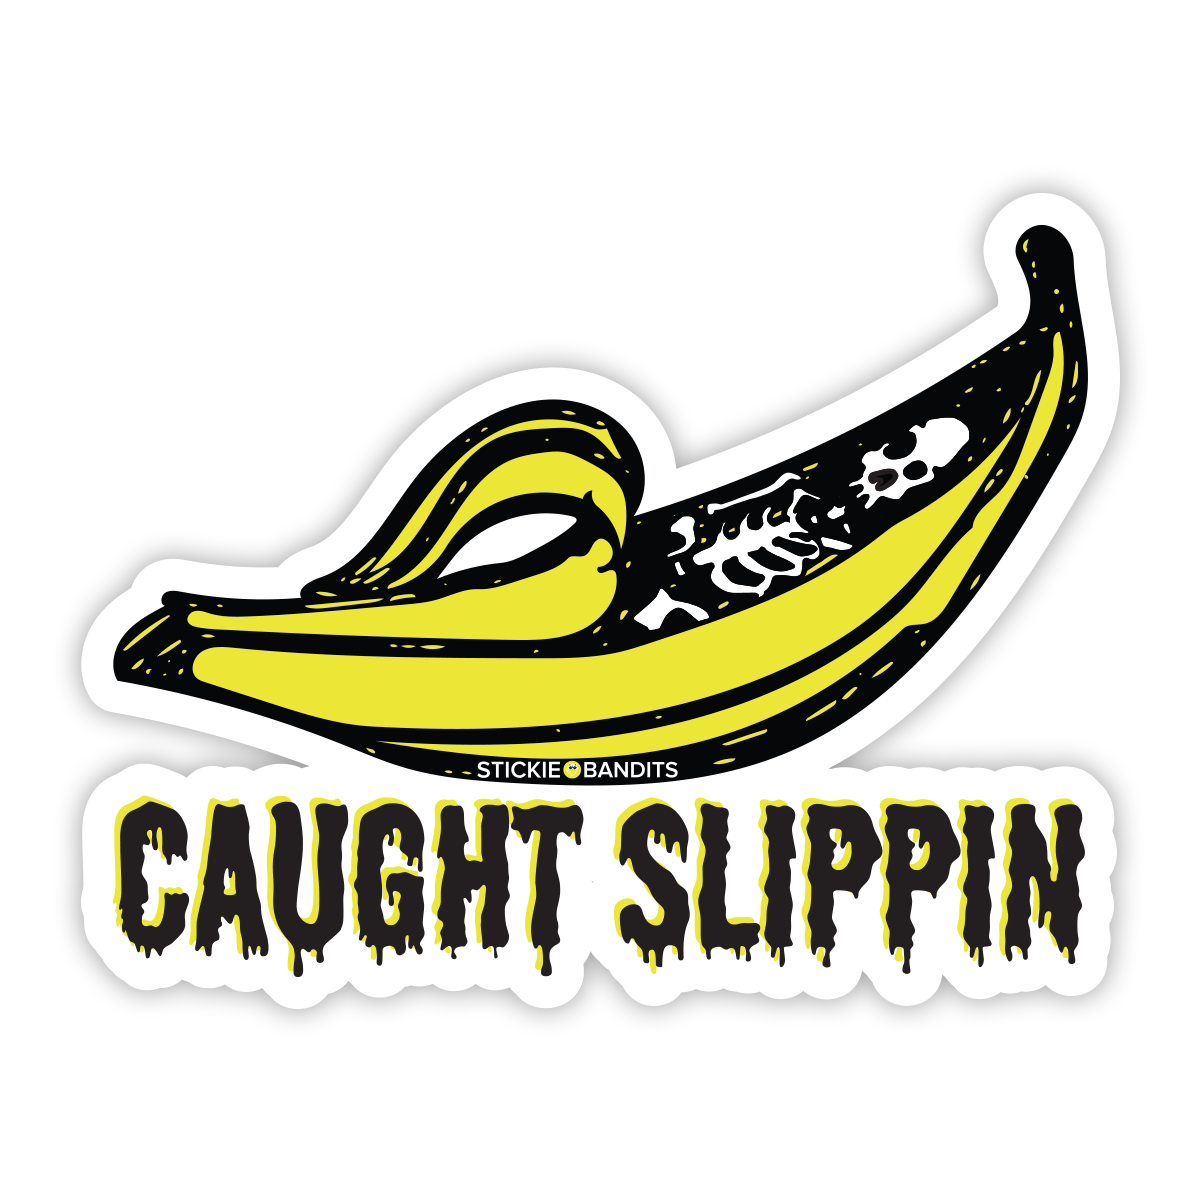 Caught Slippin' Sticker